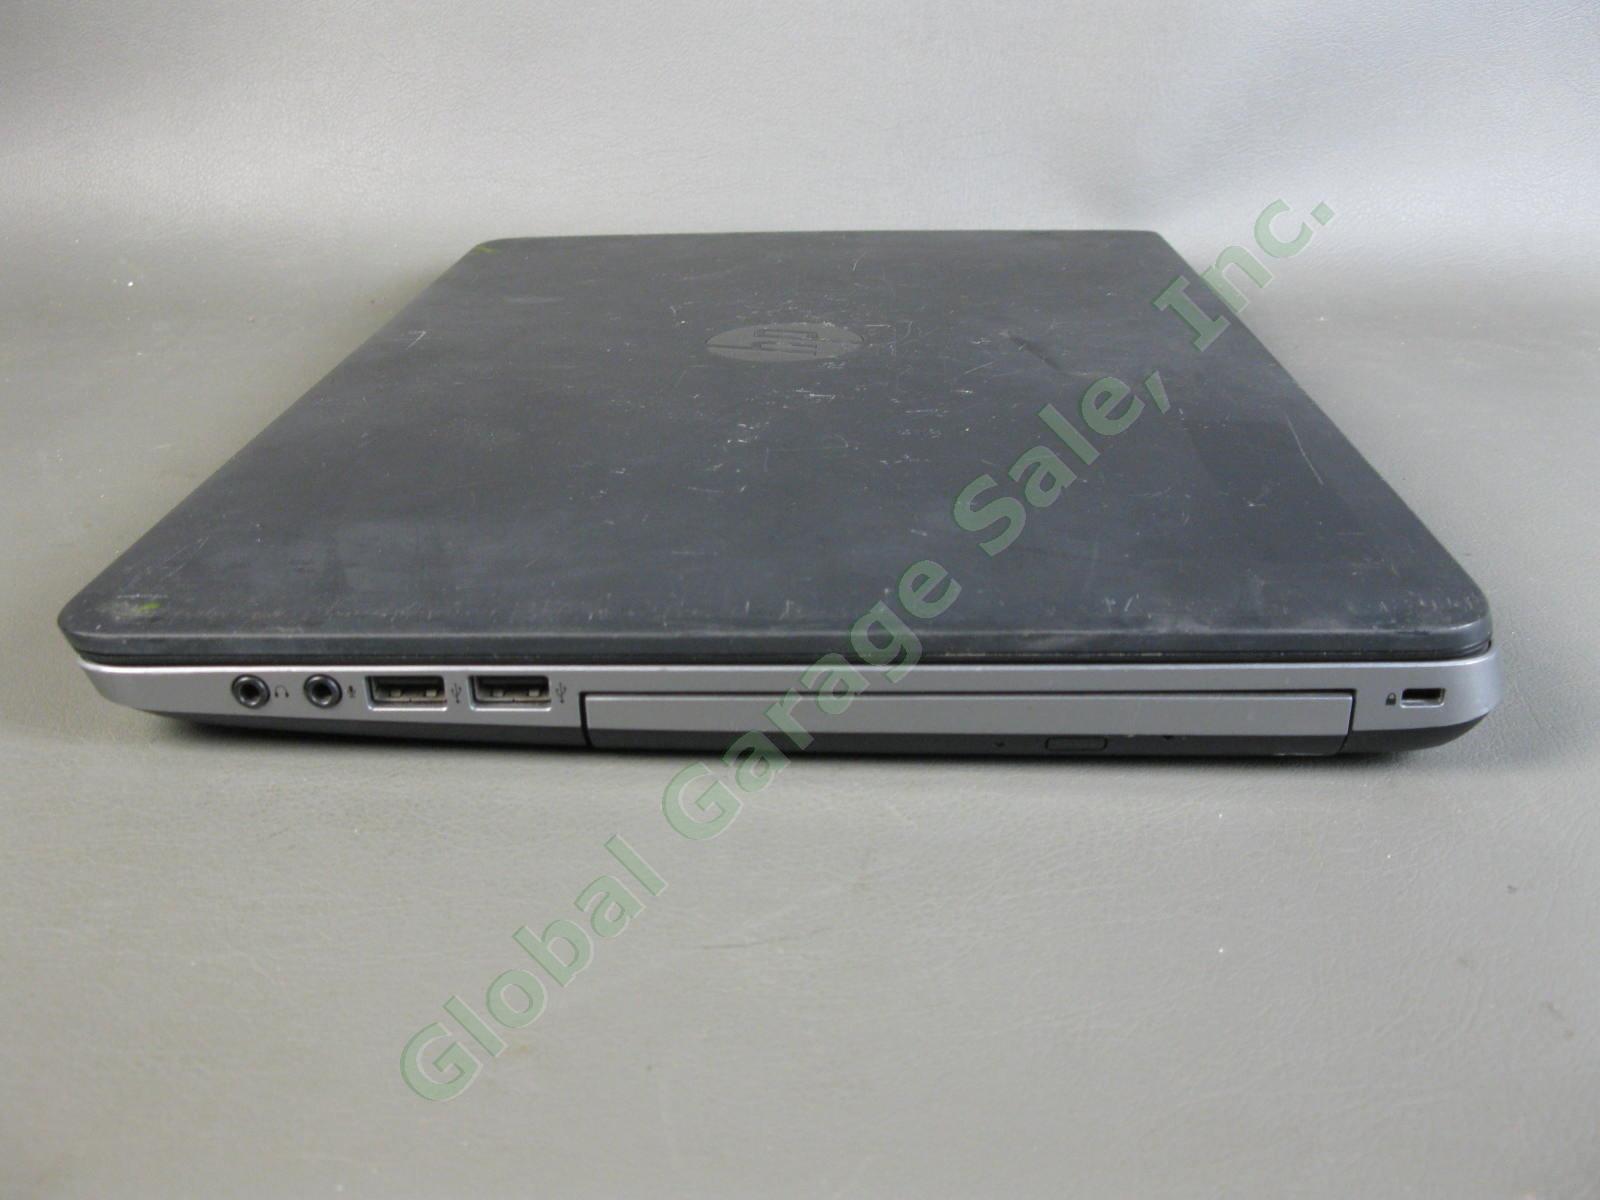 HP ProBook 450 G1 Laptop Computer i5-4200M 4GB 500GB Win10 WIFI DVD Webcam Power 5